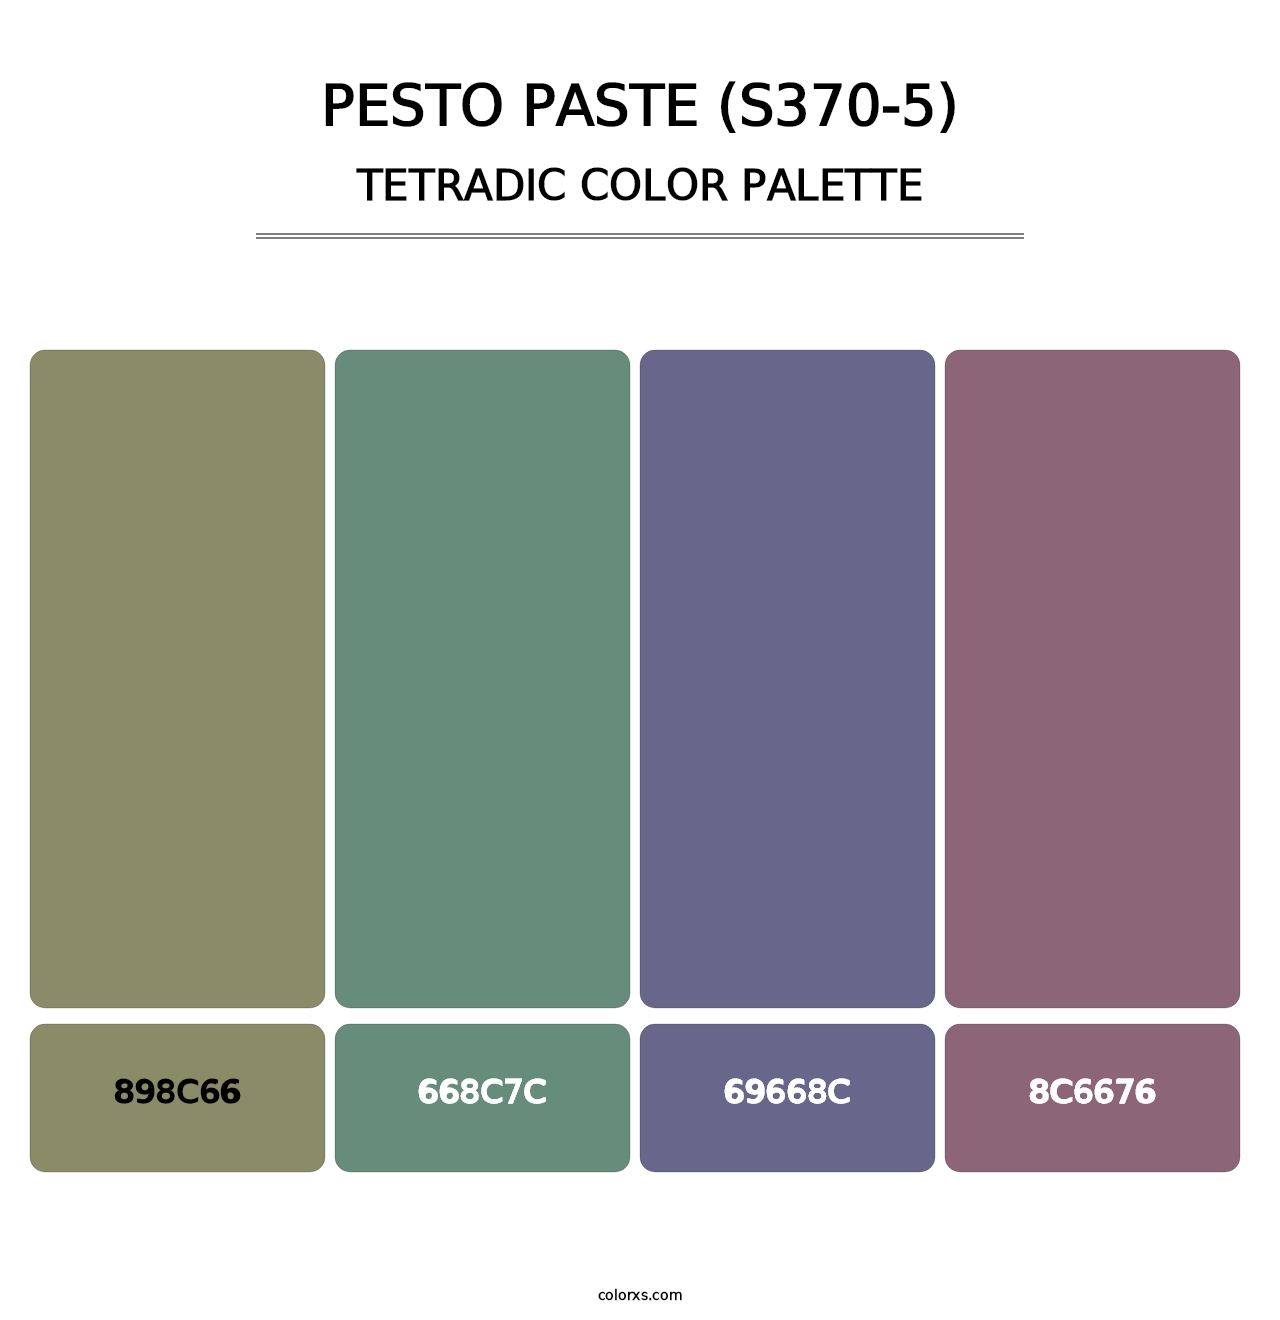 Pesto Paste (S370-5) - Tetradic Color Palette